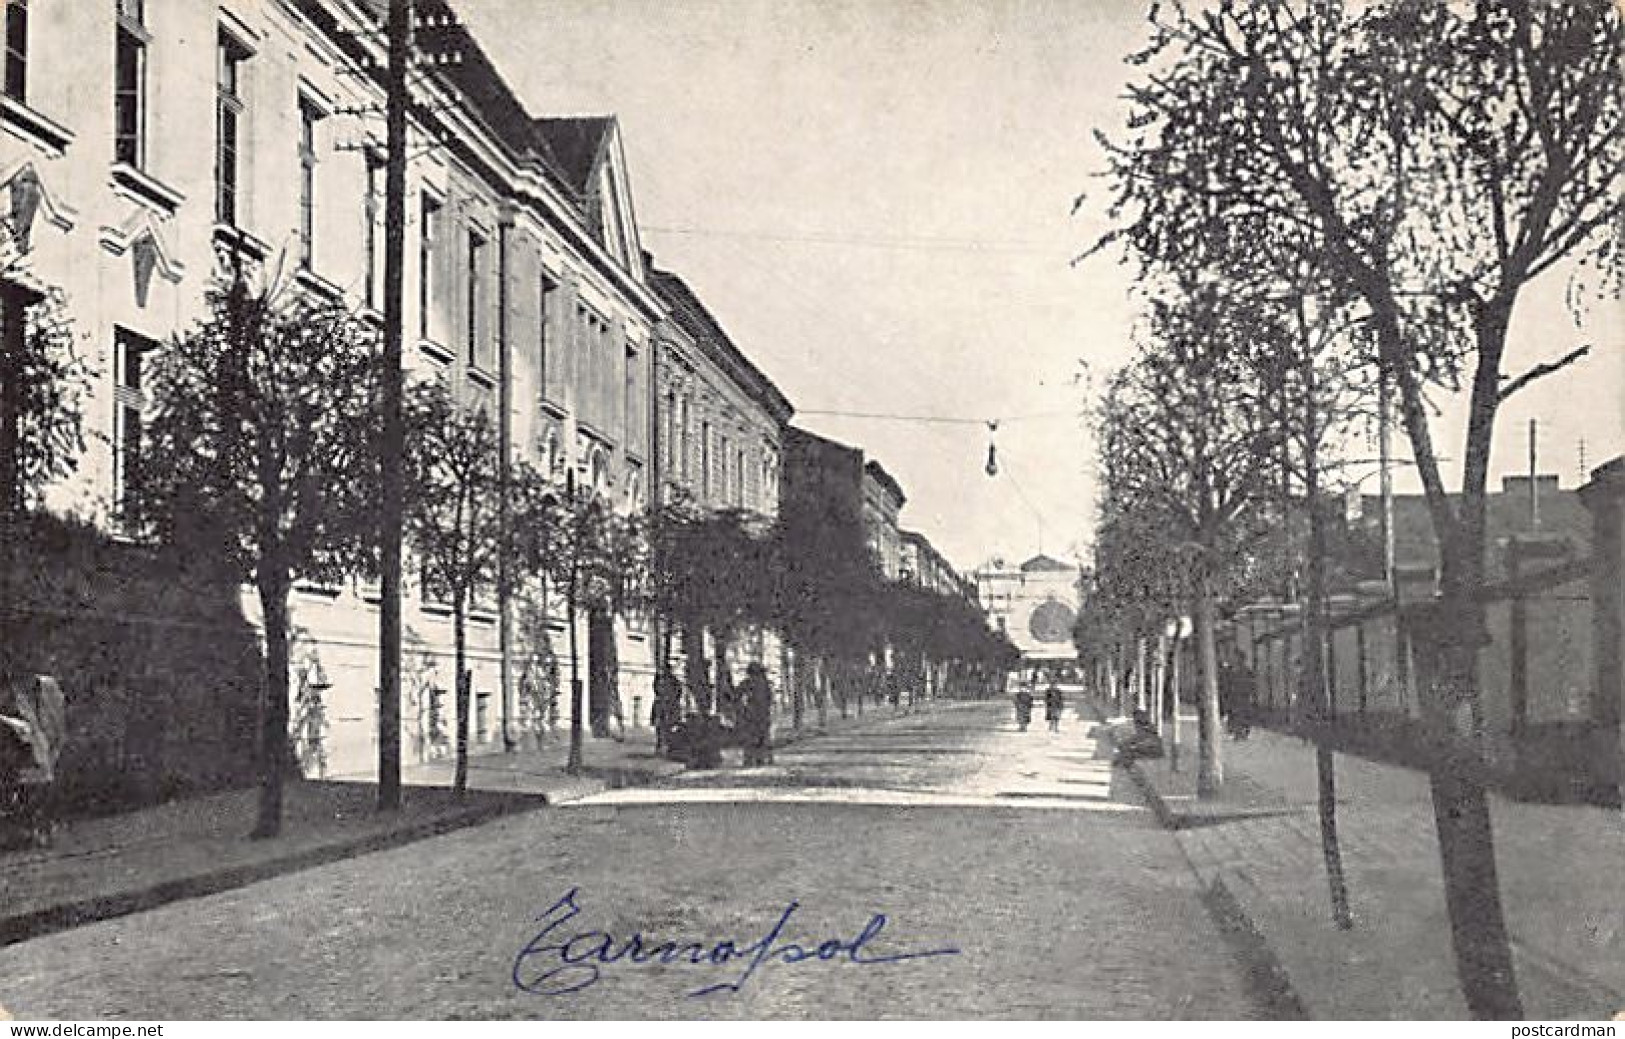 Ukraine - TERNOPIL Tarnopol - Ul. Goluchowskiego - Year 1914 - Publ. W. Laub - Husnik & Häusler  - Ukraine